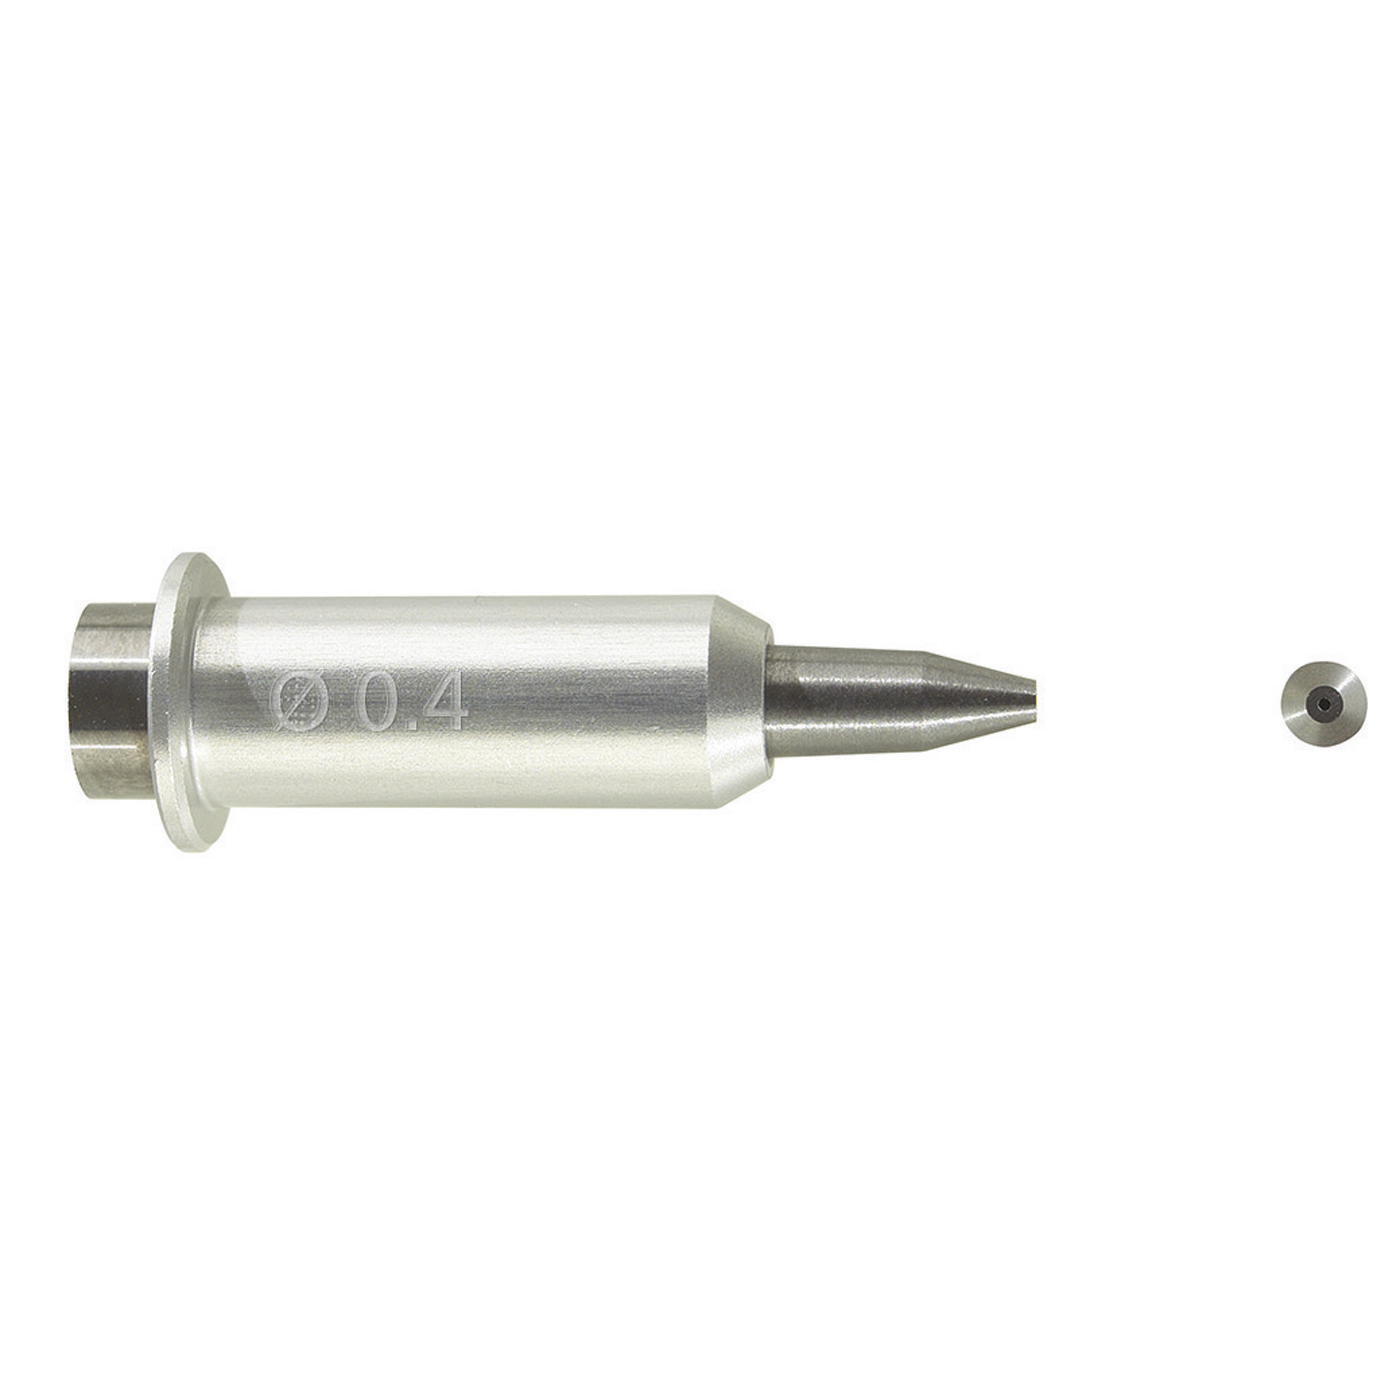 IT Blasting Nozzle, ø 0.40 mm - 1 piece